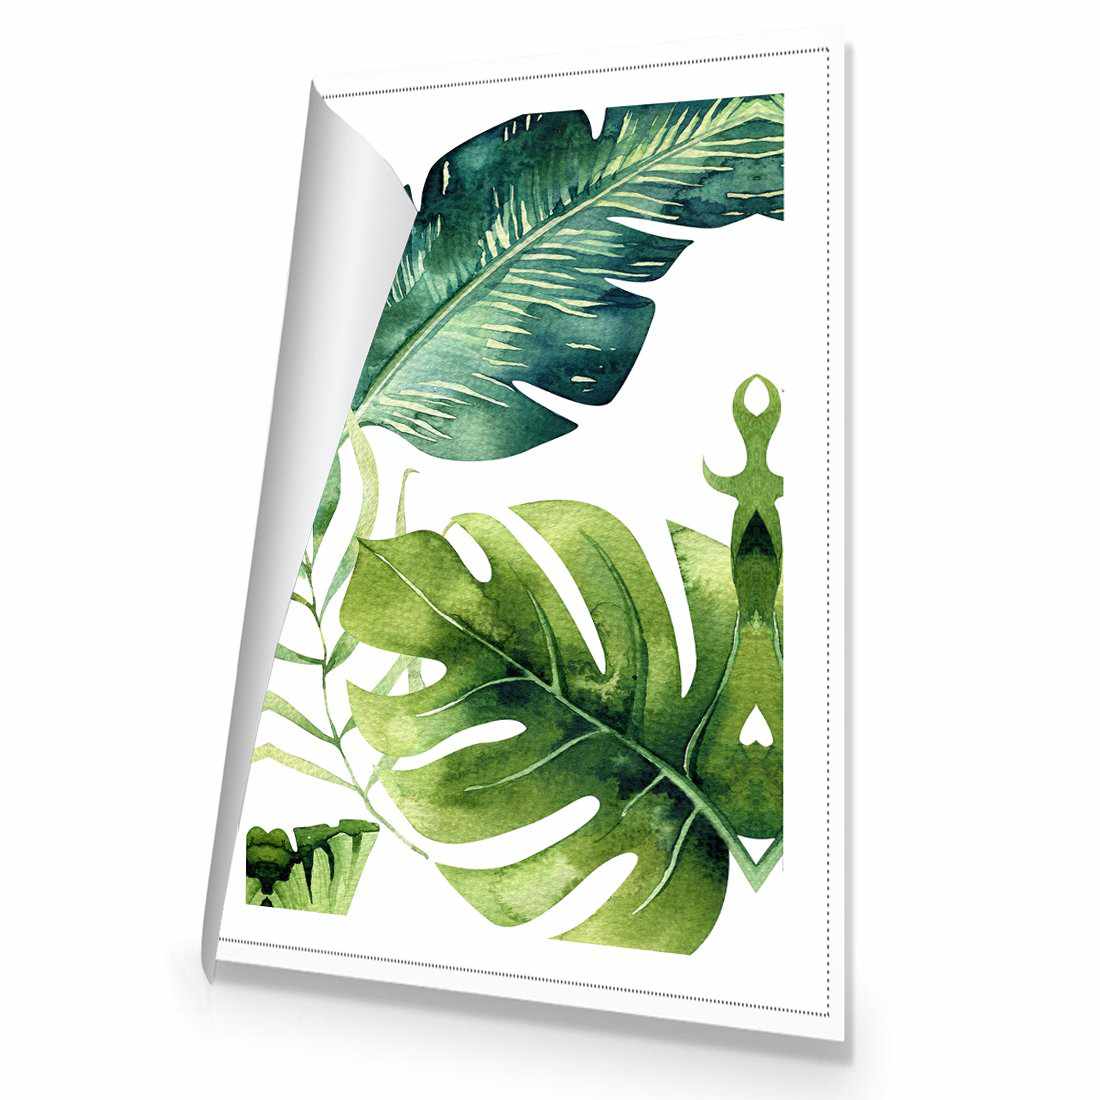 Fascinating Foliage Version 02 Canvas Art-Canvas-Wall Art Designs-45x30cm-Rolled Canvas-Wall Art Designs